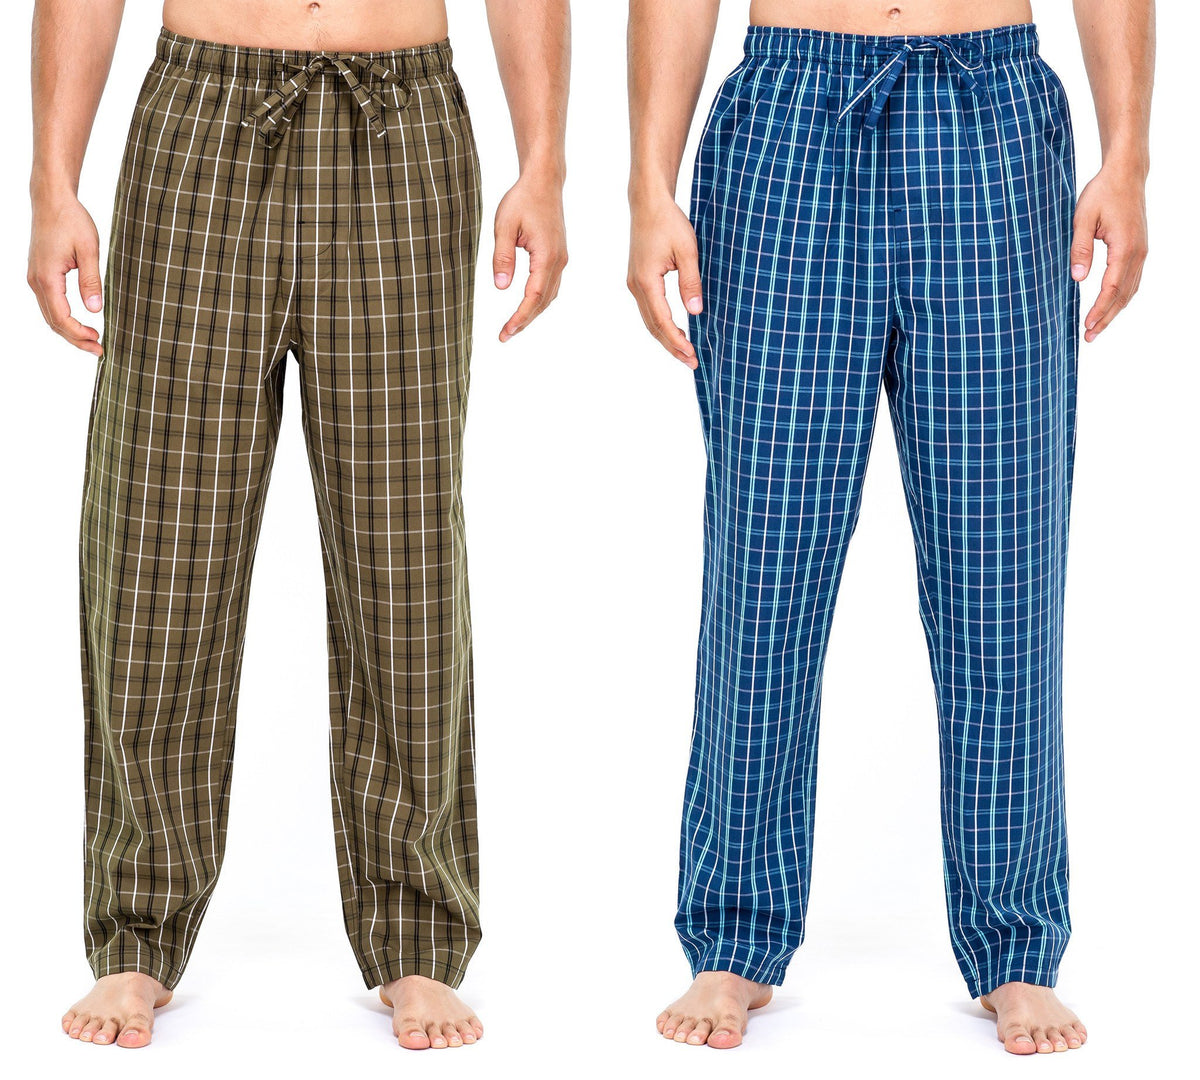 Men's Premium Cotton Lounge/Sleep Pants - 2 Pack - 2-Pack (Dark Blue - Military Olive Plaid)